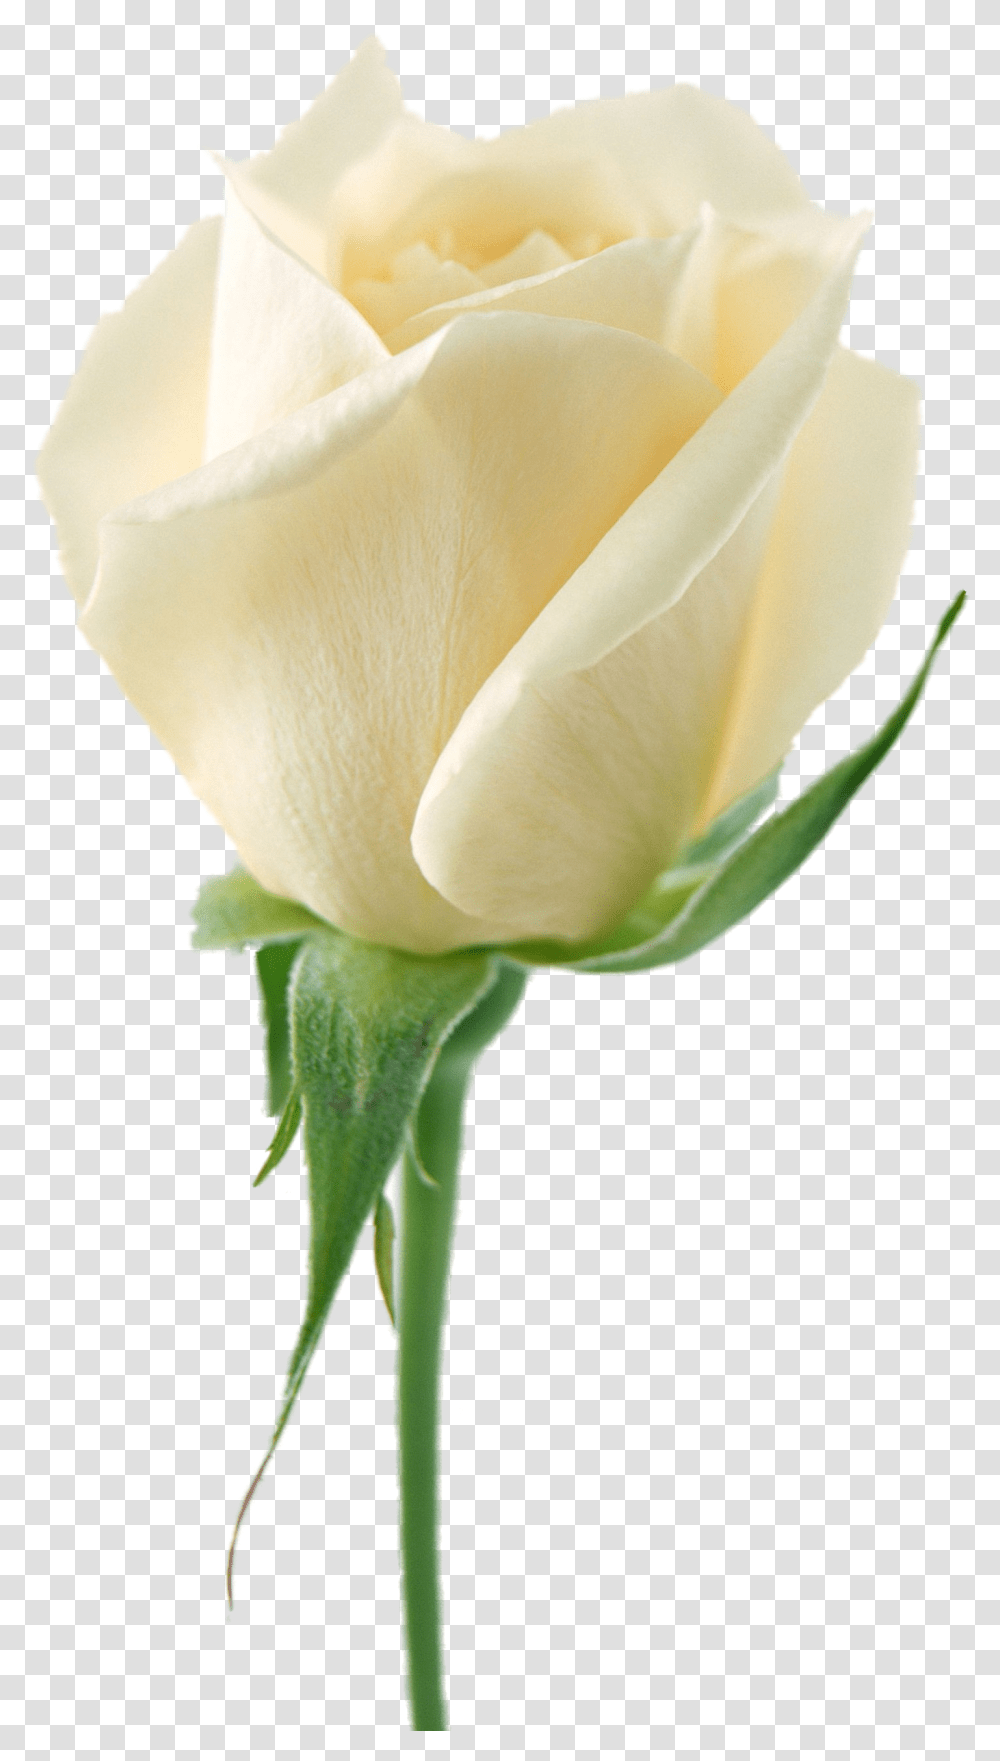 White Rose Image Flower White Rose Picture White Rose, Plant, Blossom, Petal, Tulip Transparent Png